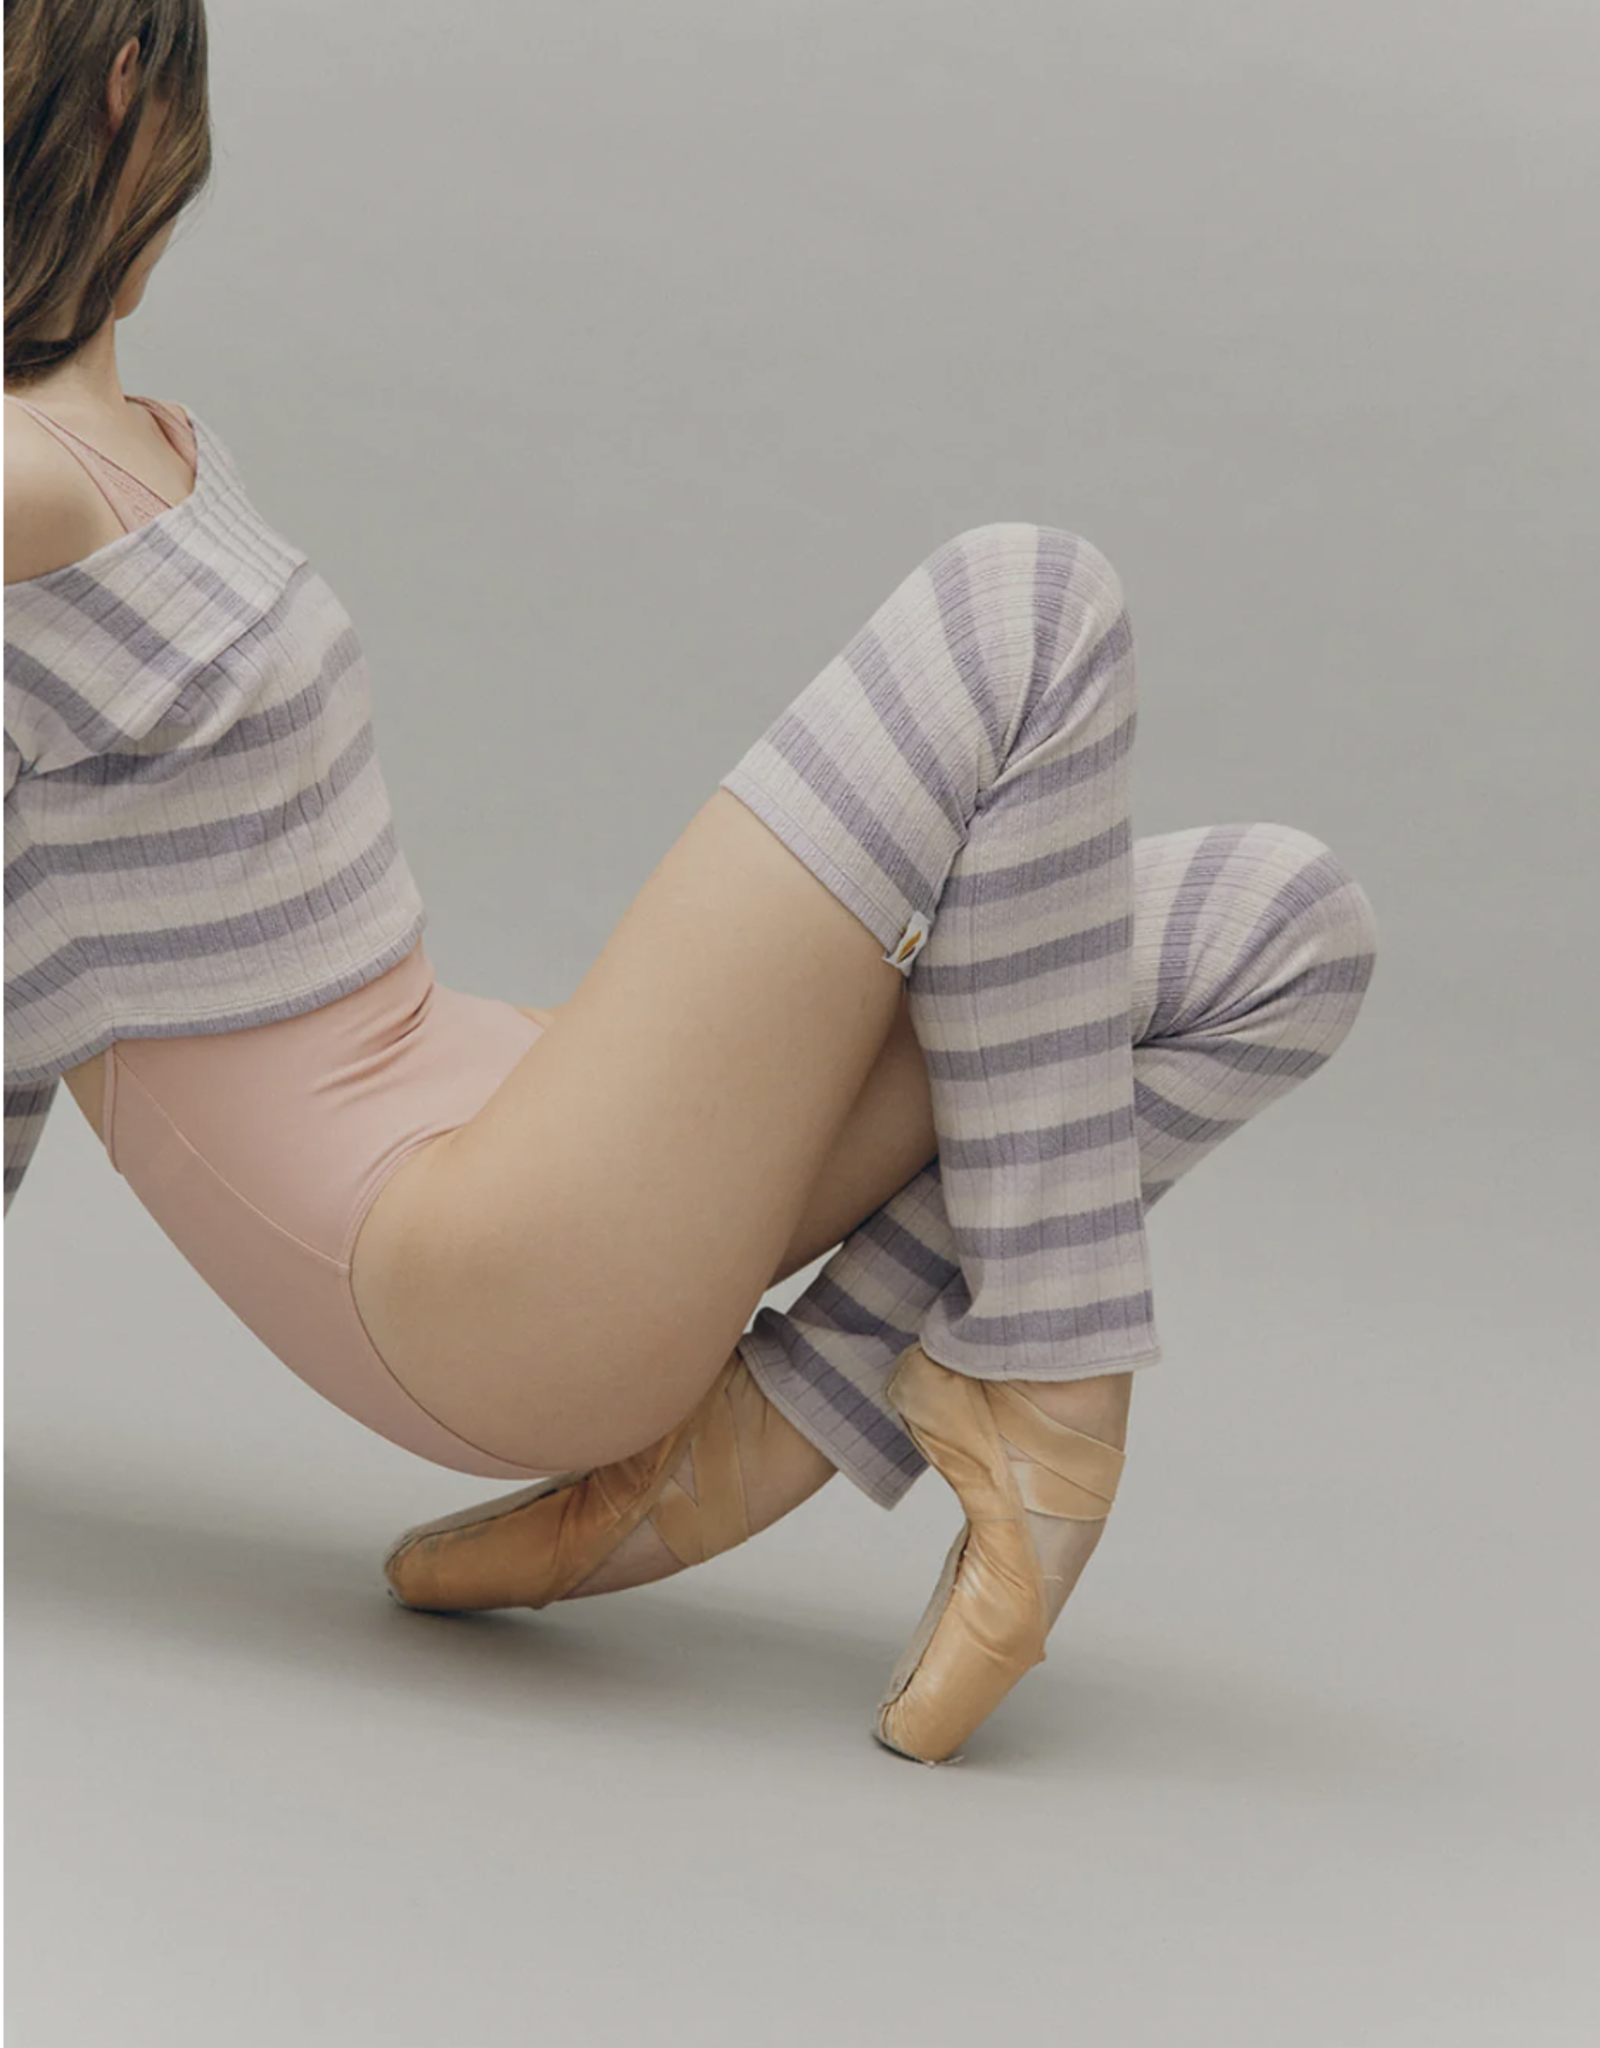 Rubiawear Ladies' Shorty Leg Warmers Lavender Dreams